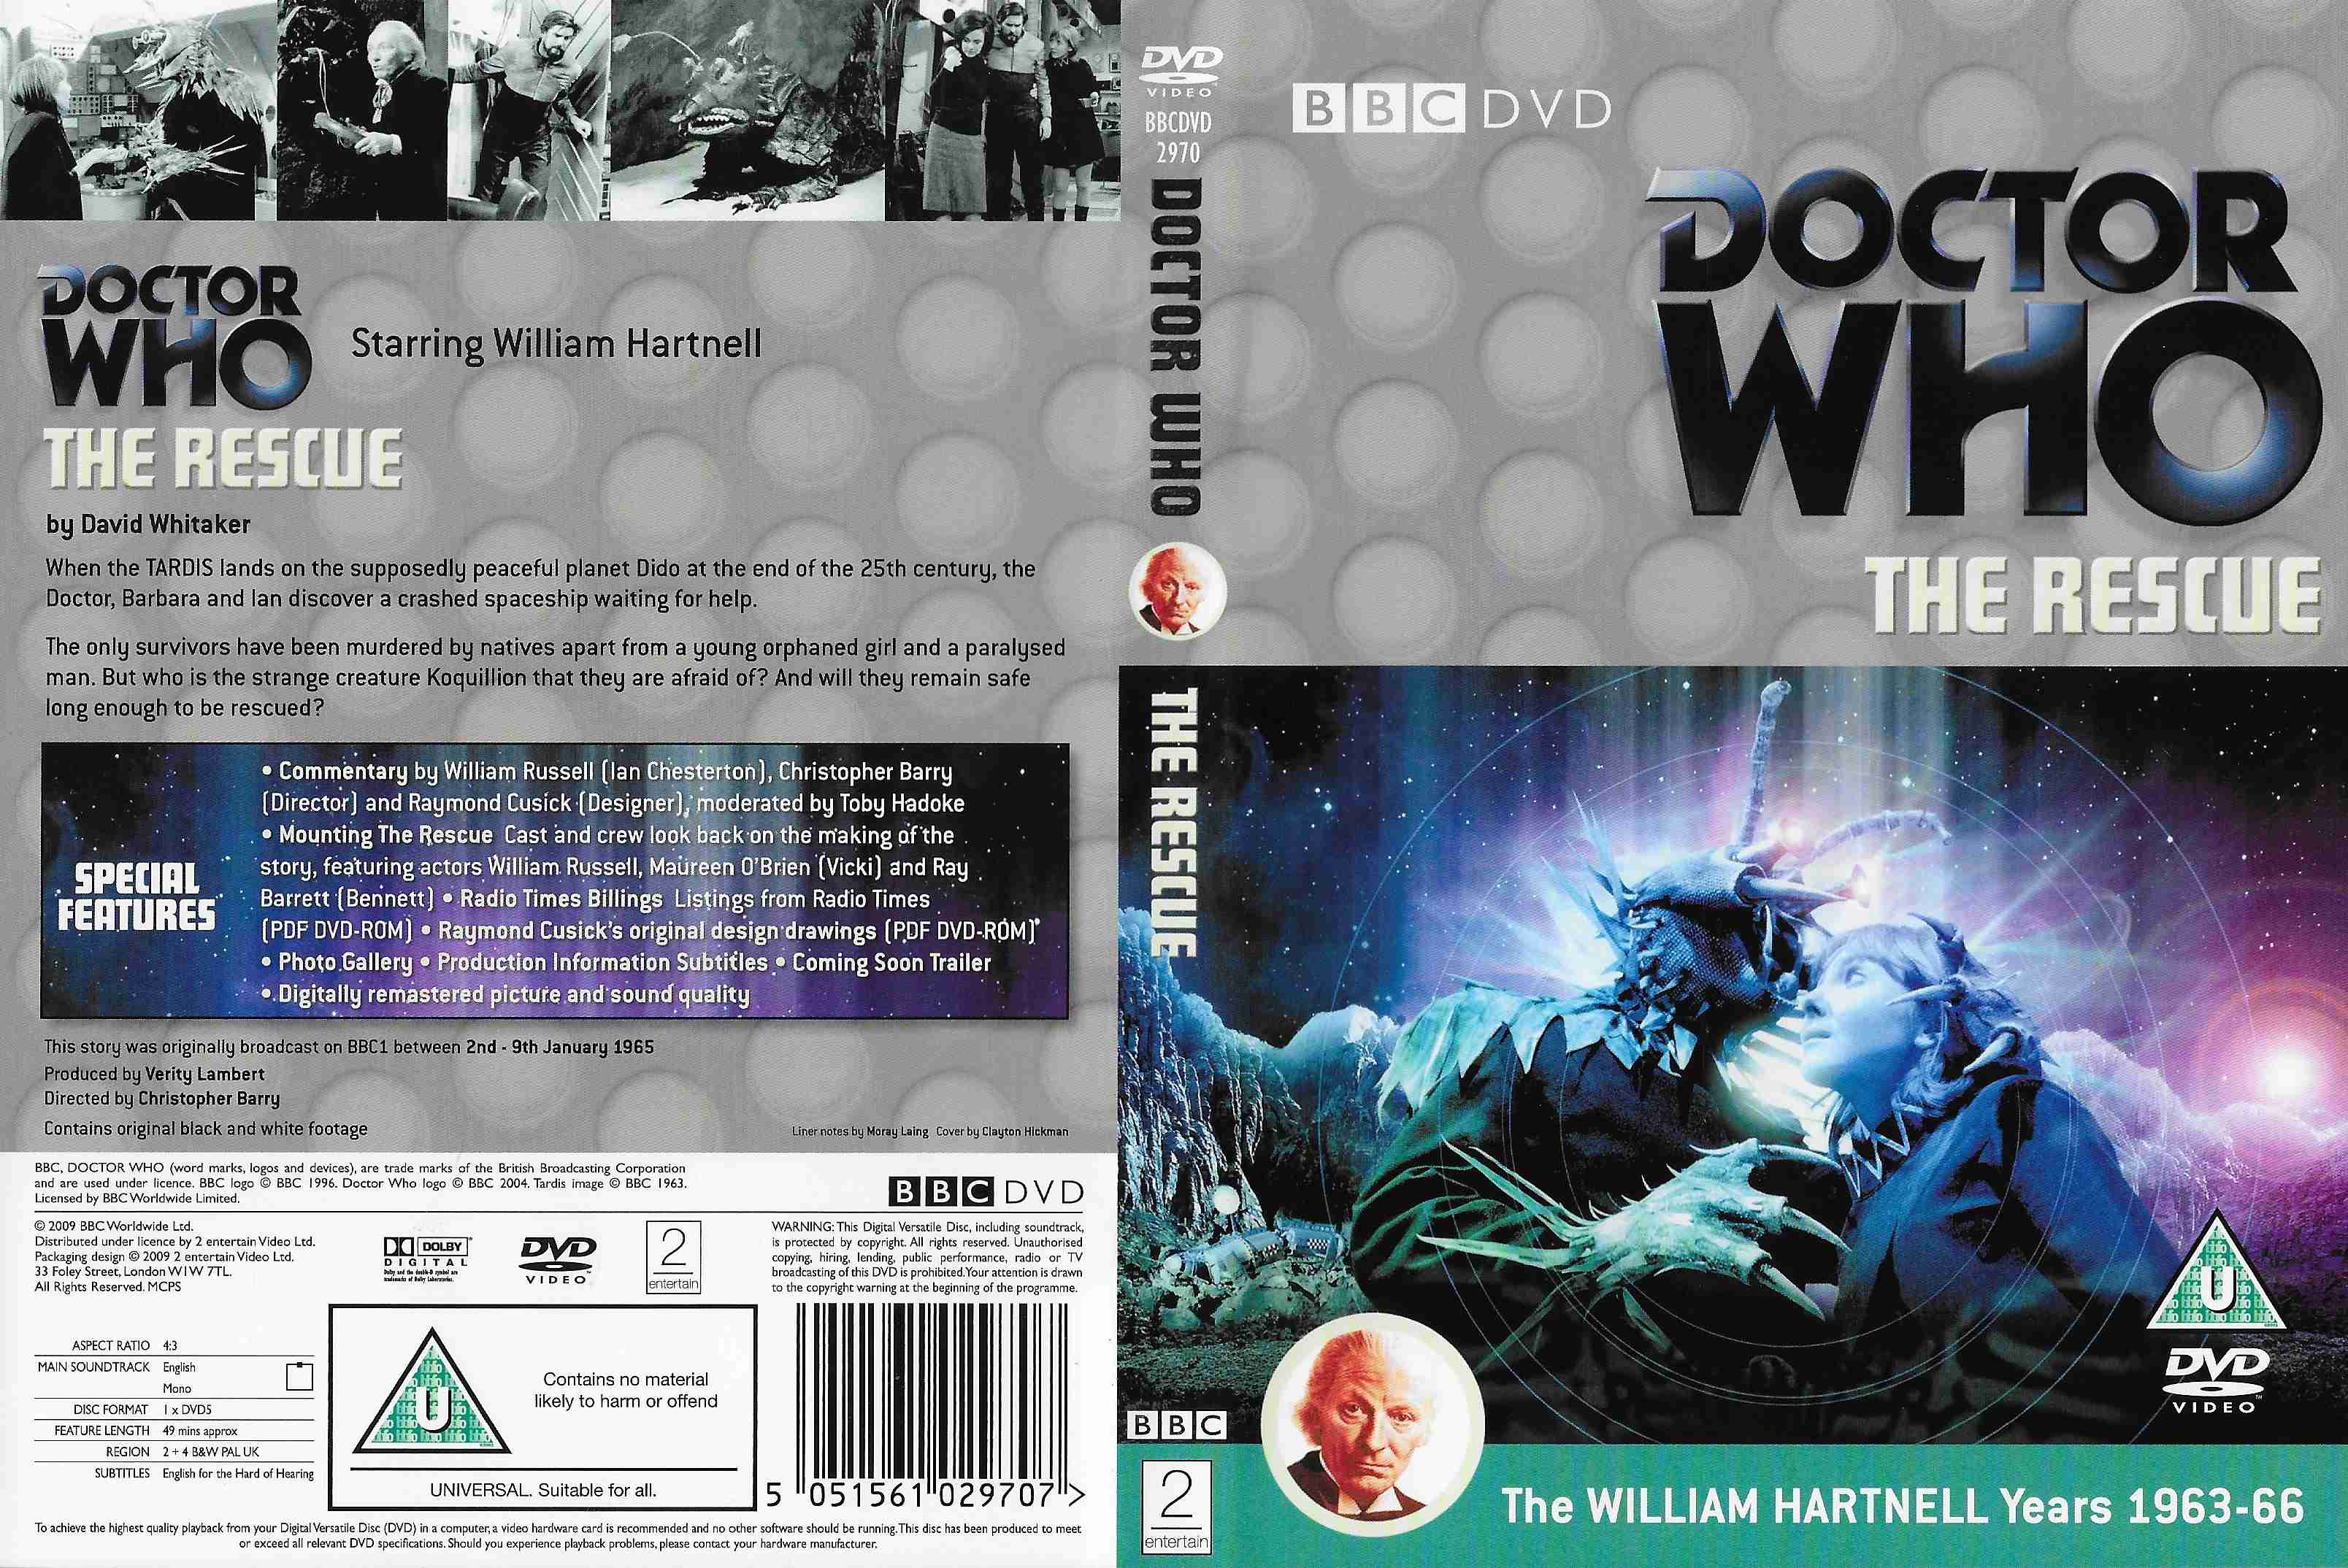 Back cover of BBCDVD 2970